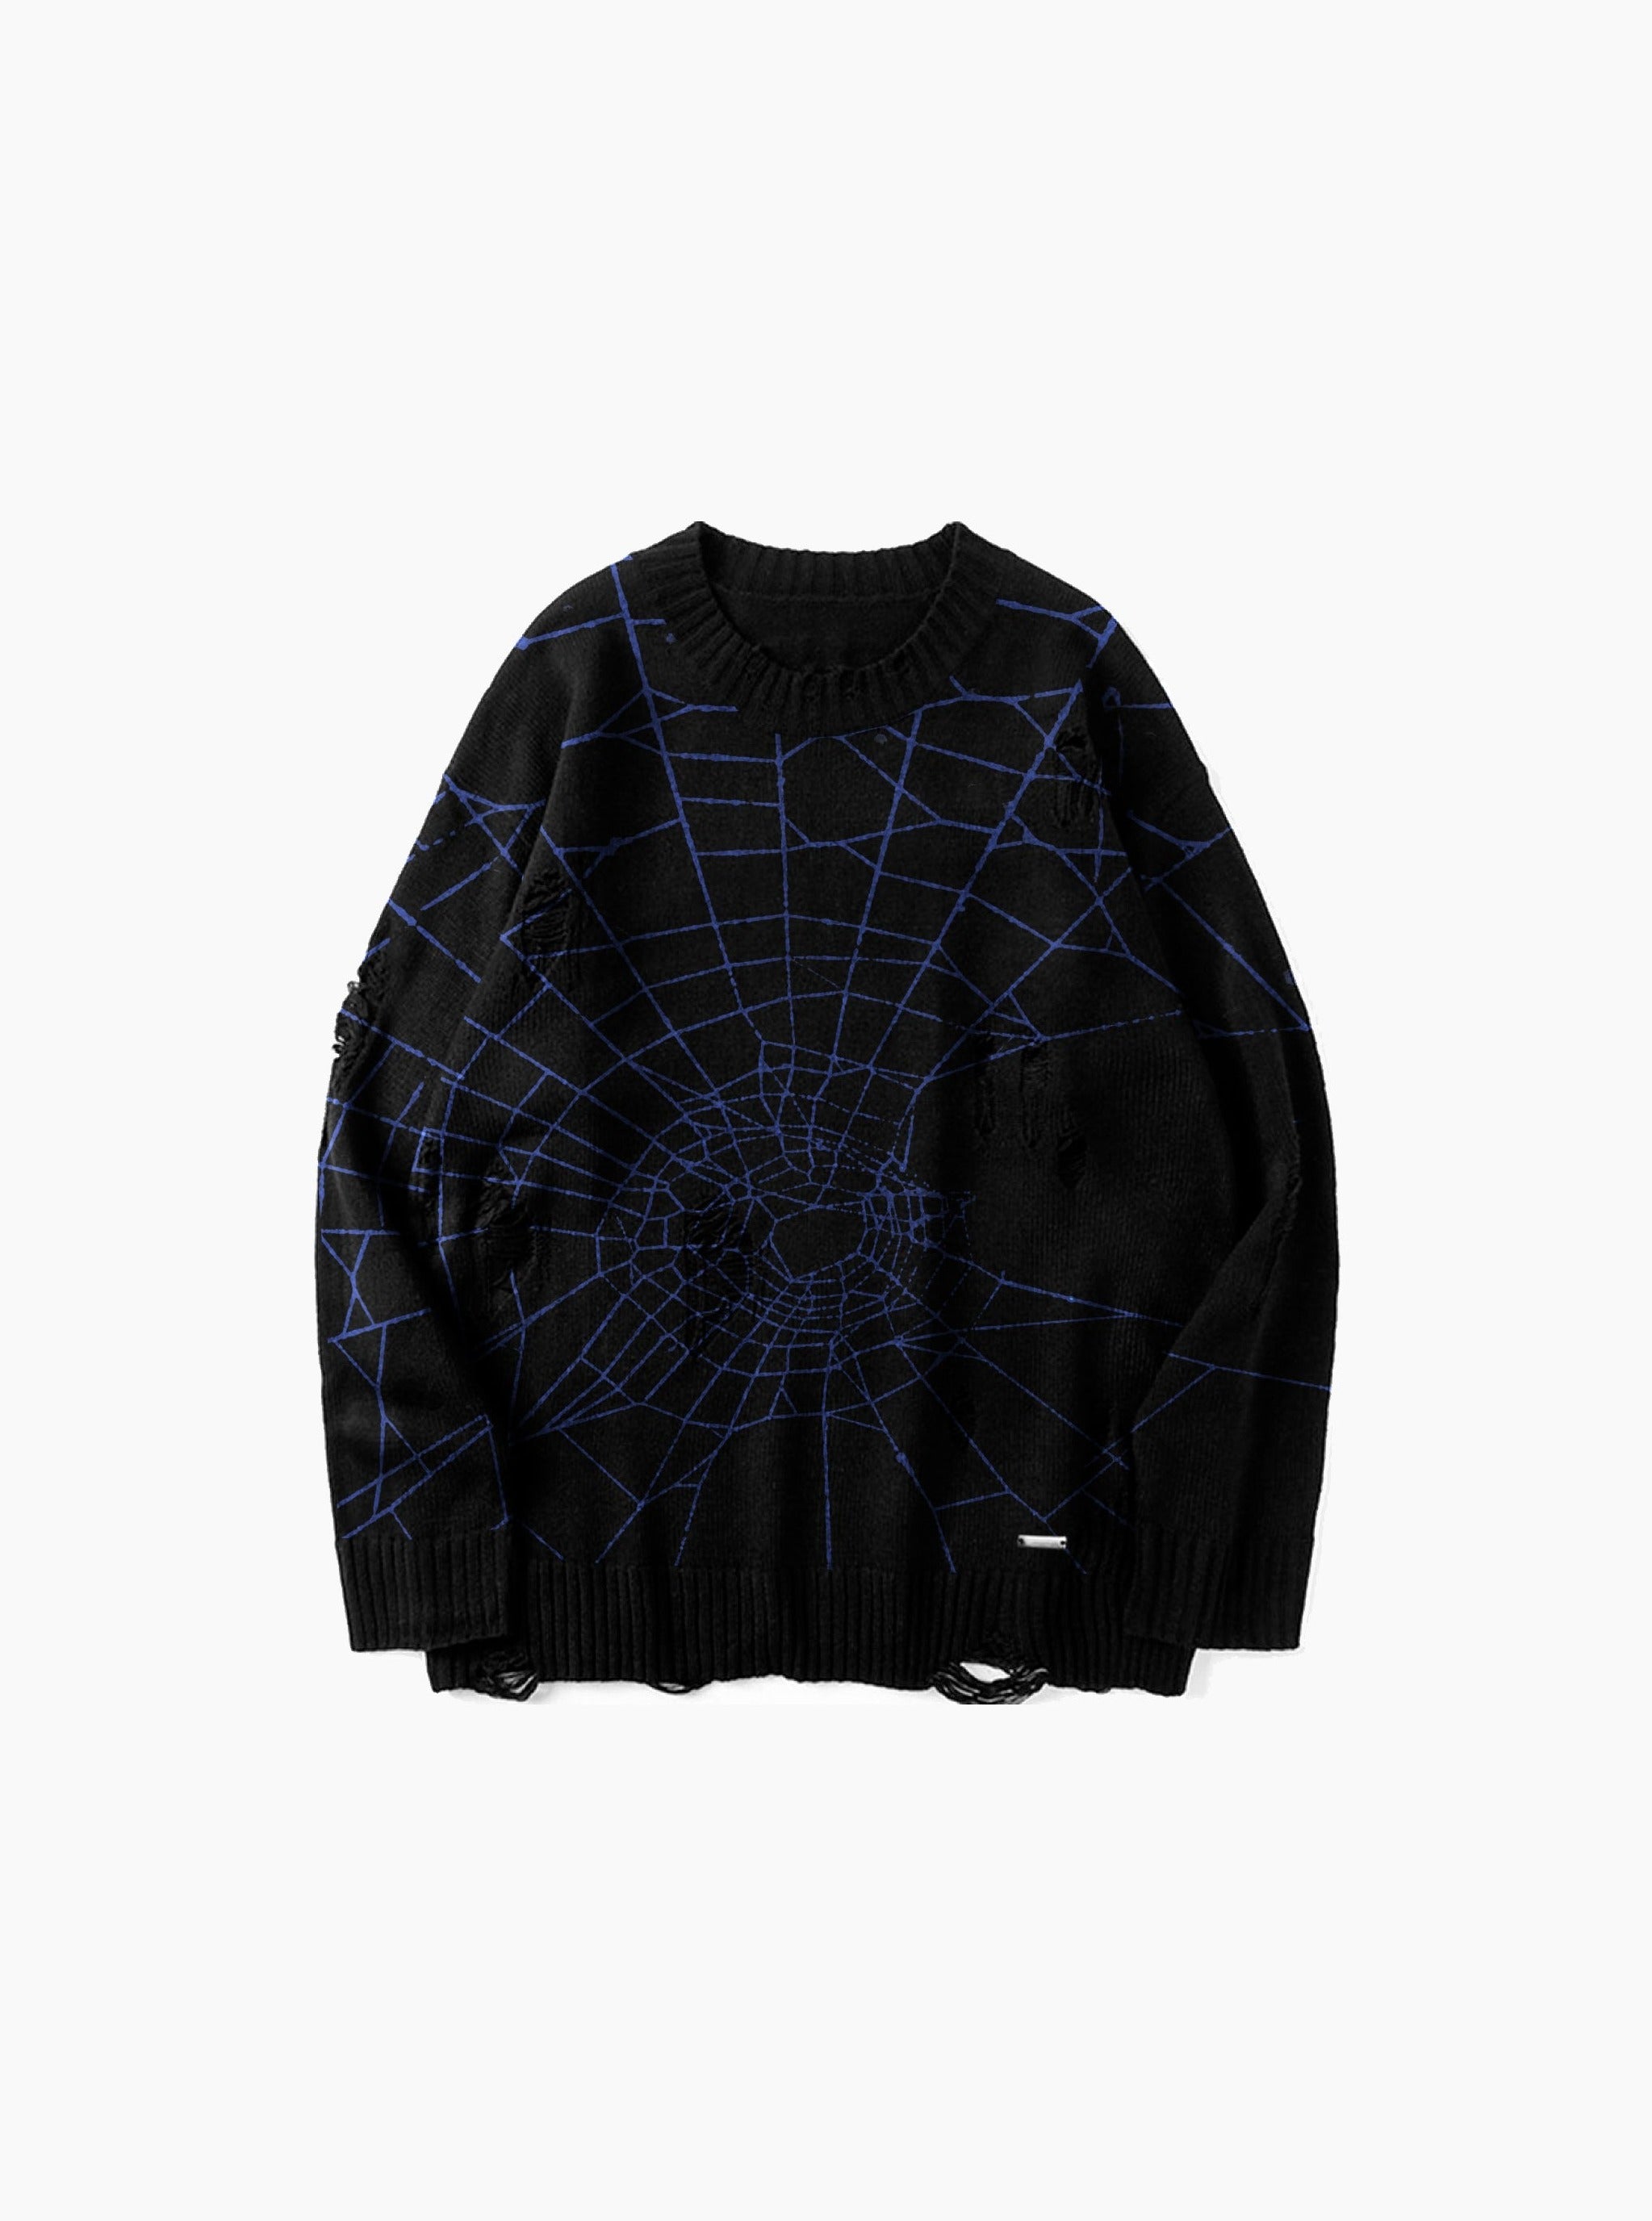 Tong et. Al Dark Web Distressed Knit Sweater